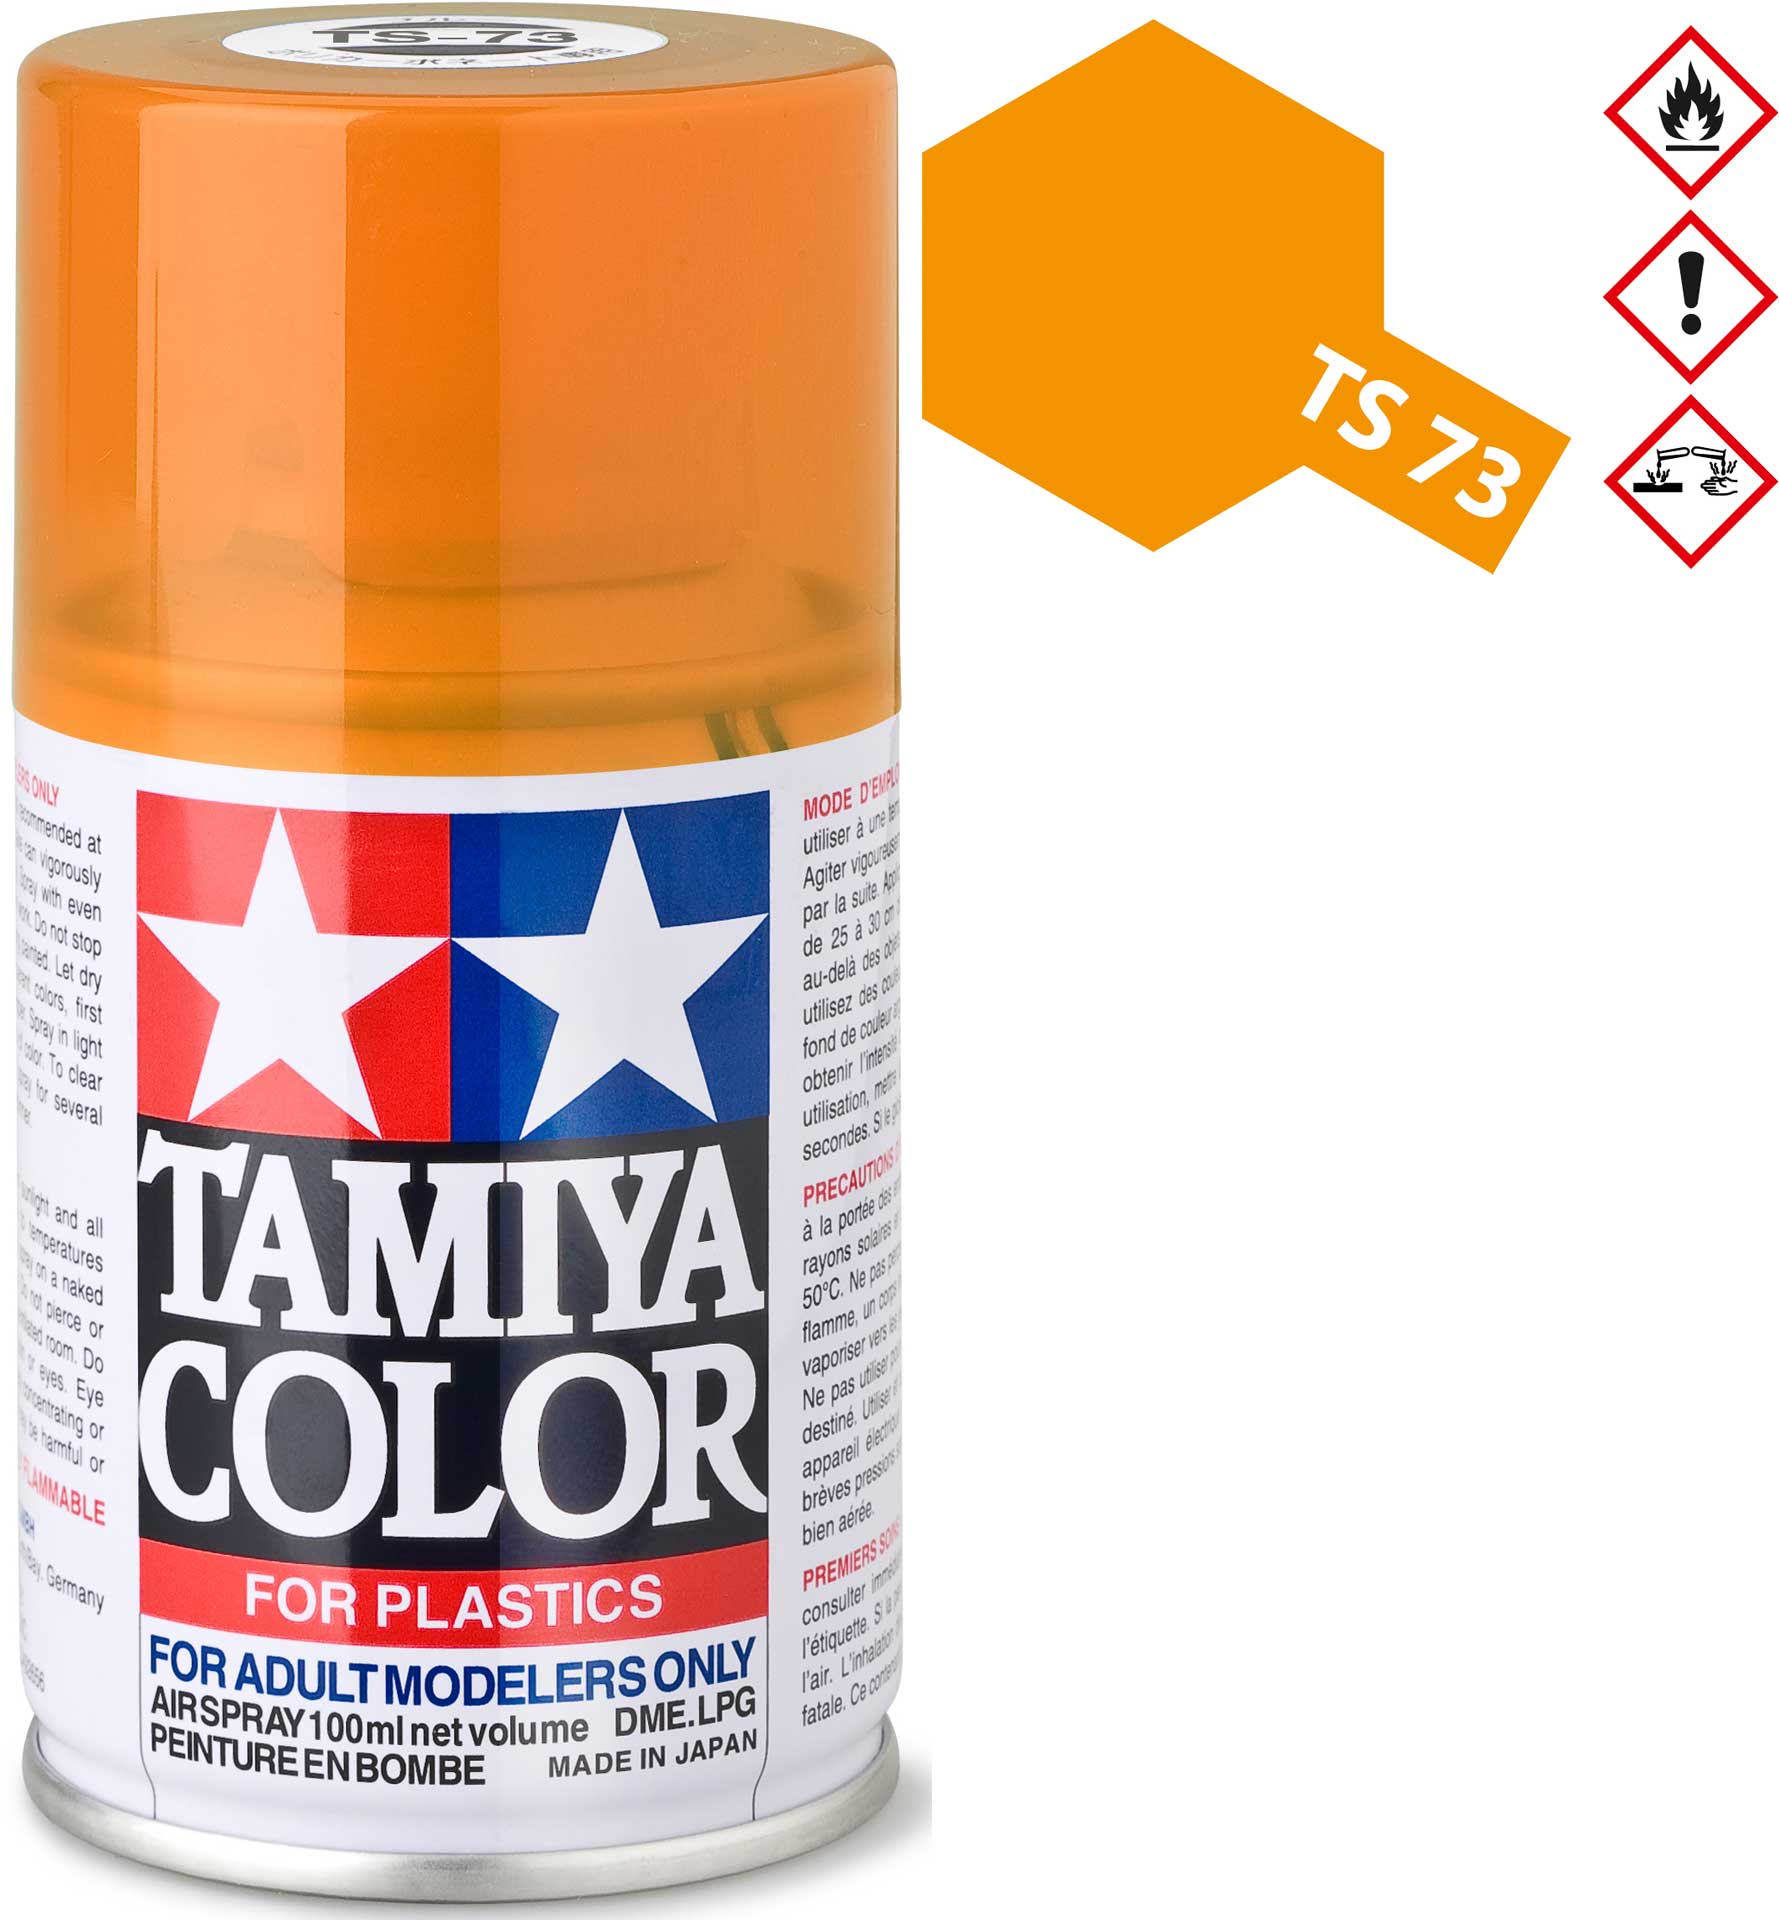 TAMIYA TS-73 Orange Transparent klar glänzend Kunststoff Spray 100ml